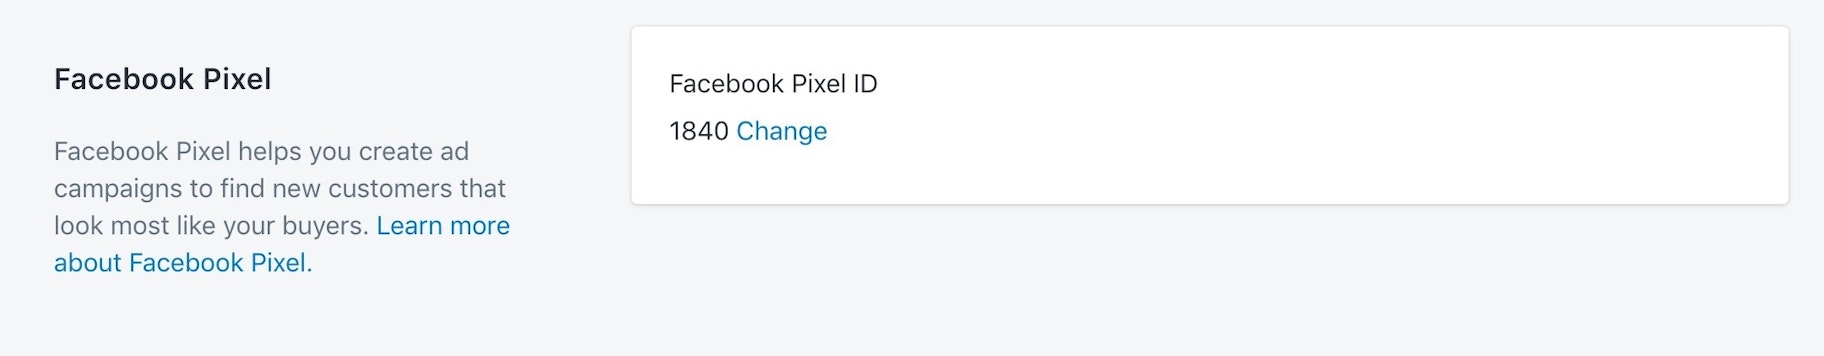 在shopify中插入Facebook Pixel ID